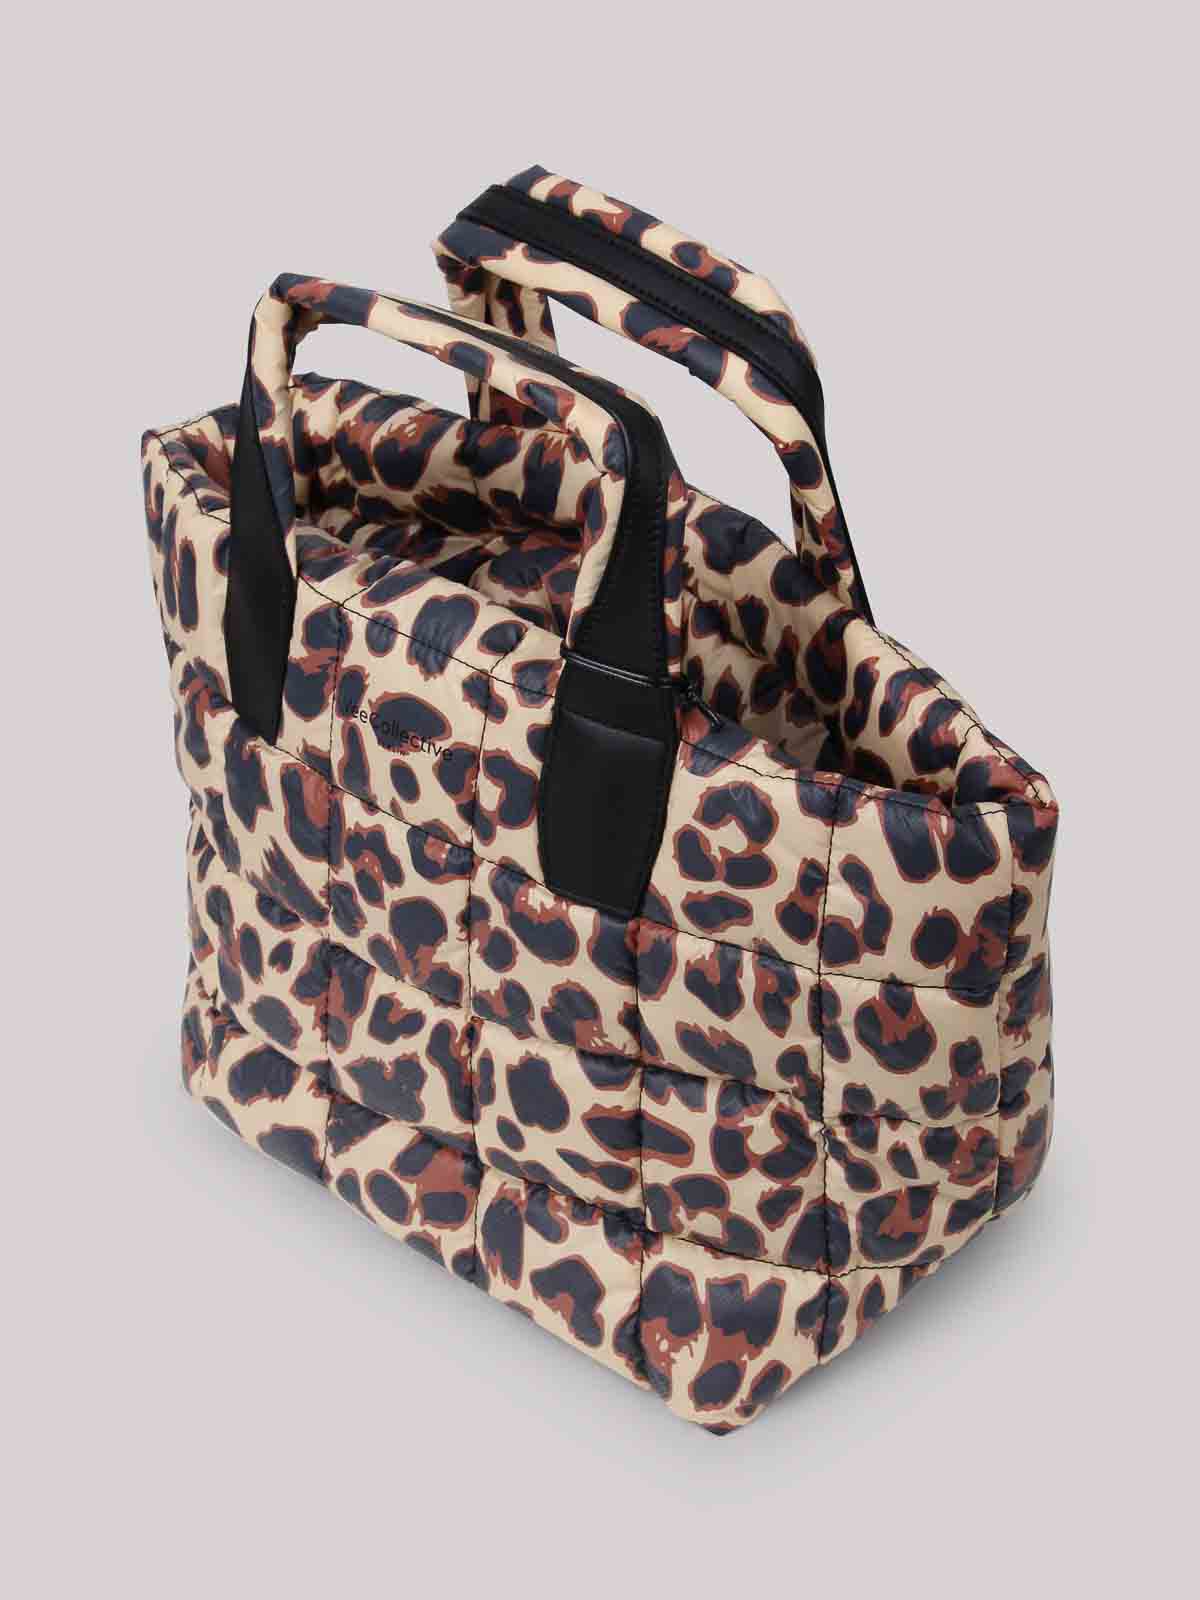 Shop Veecollective Tote Porter Shopper Bag In Animal Print